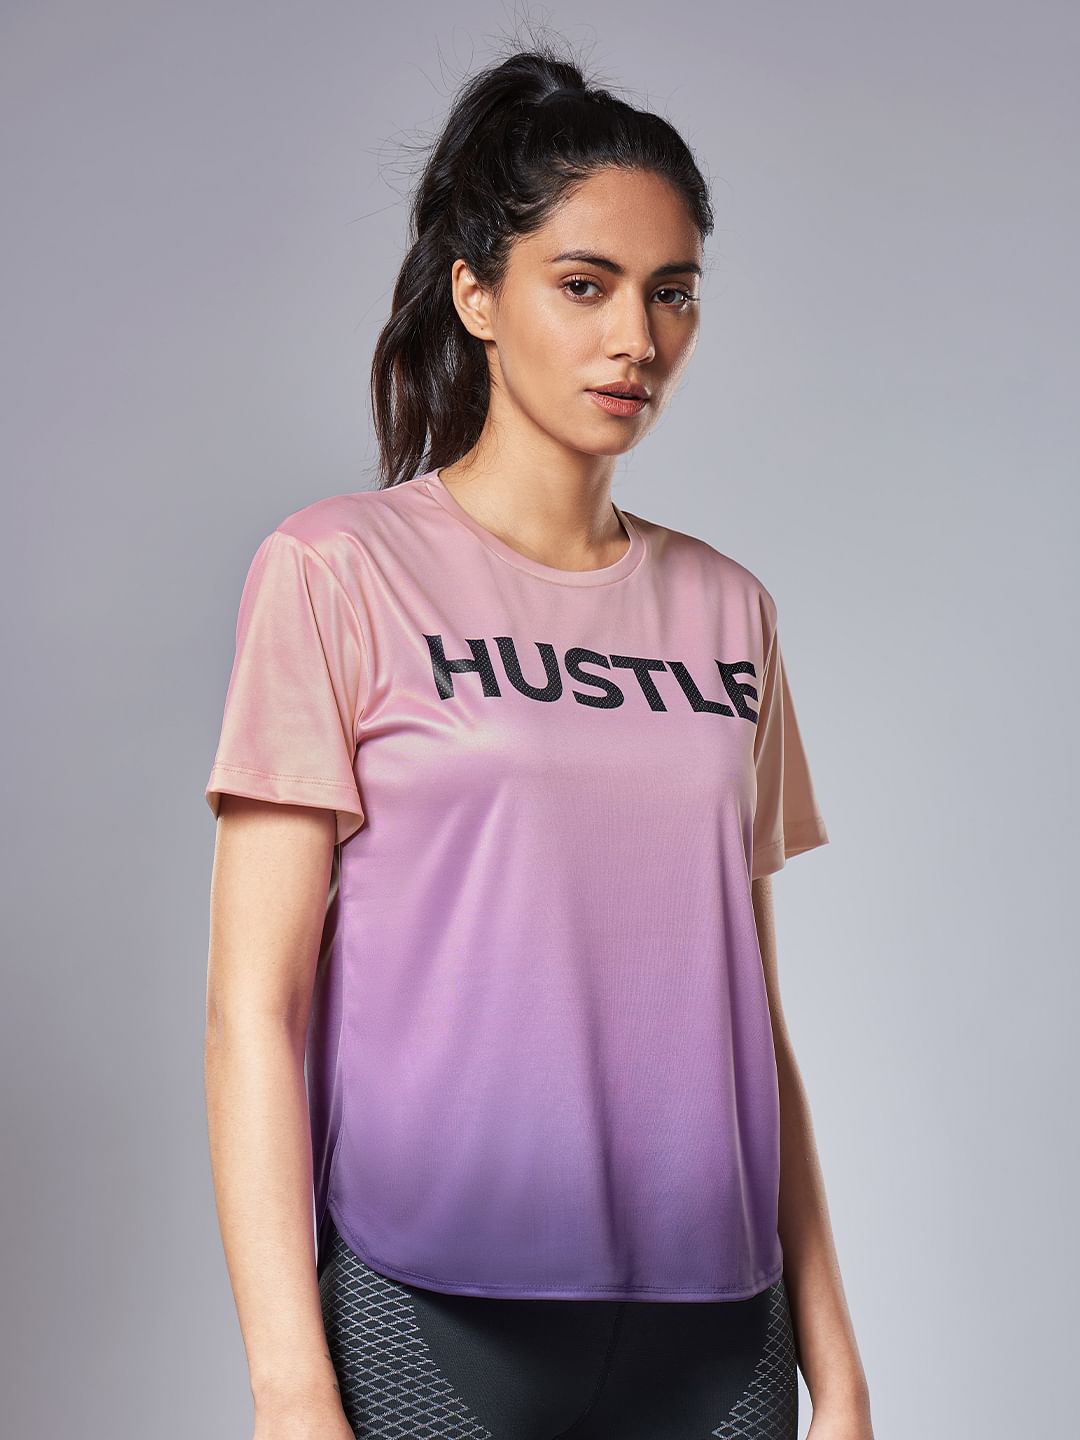 Hustle: Yoga T-Shirt